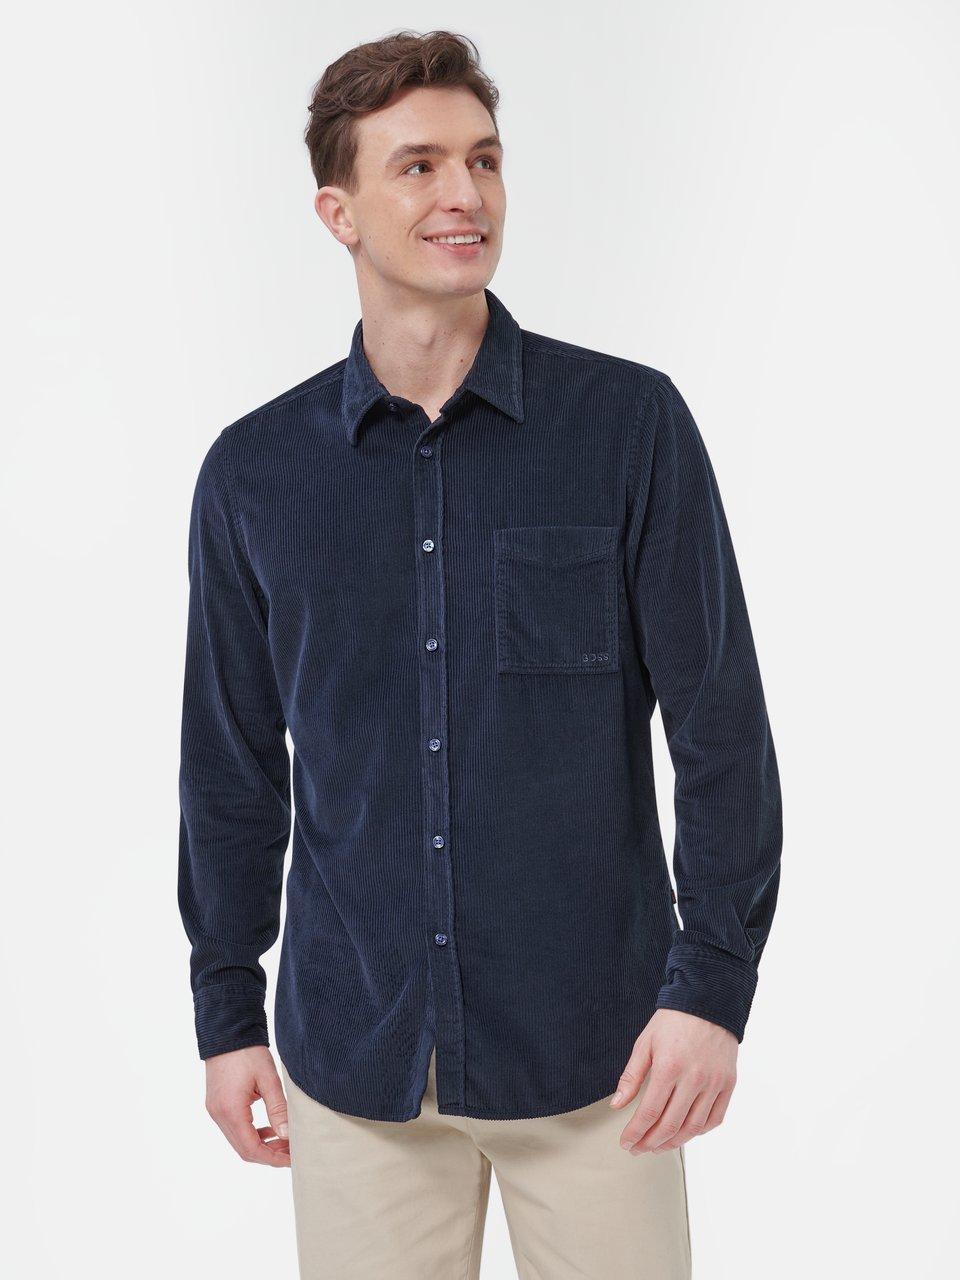 Herrenhemden online Peter Hahn bei | Hemden kaufen